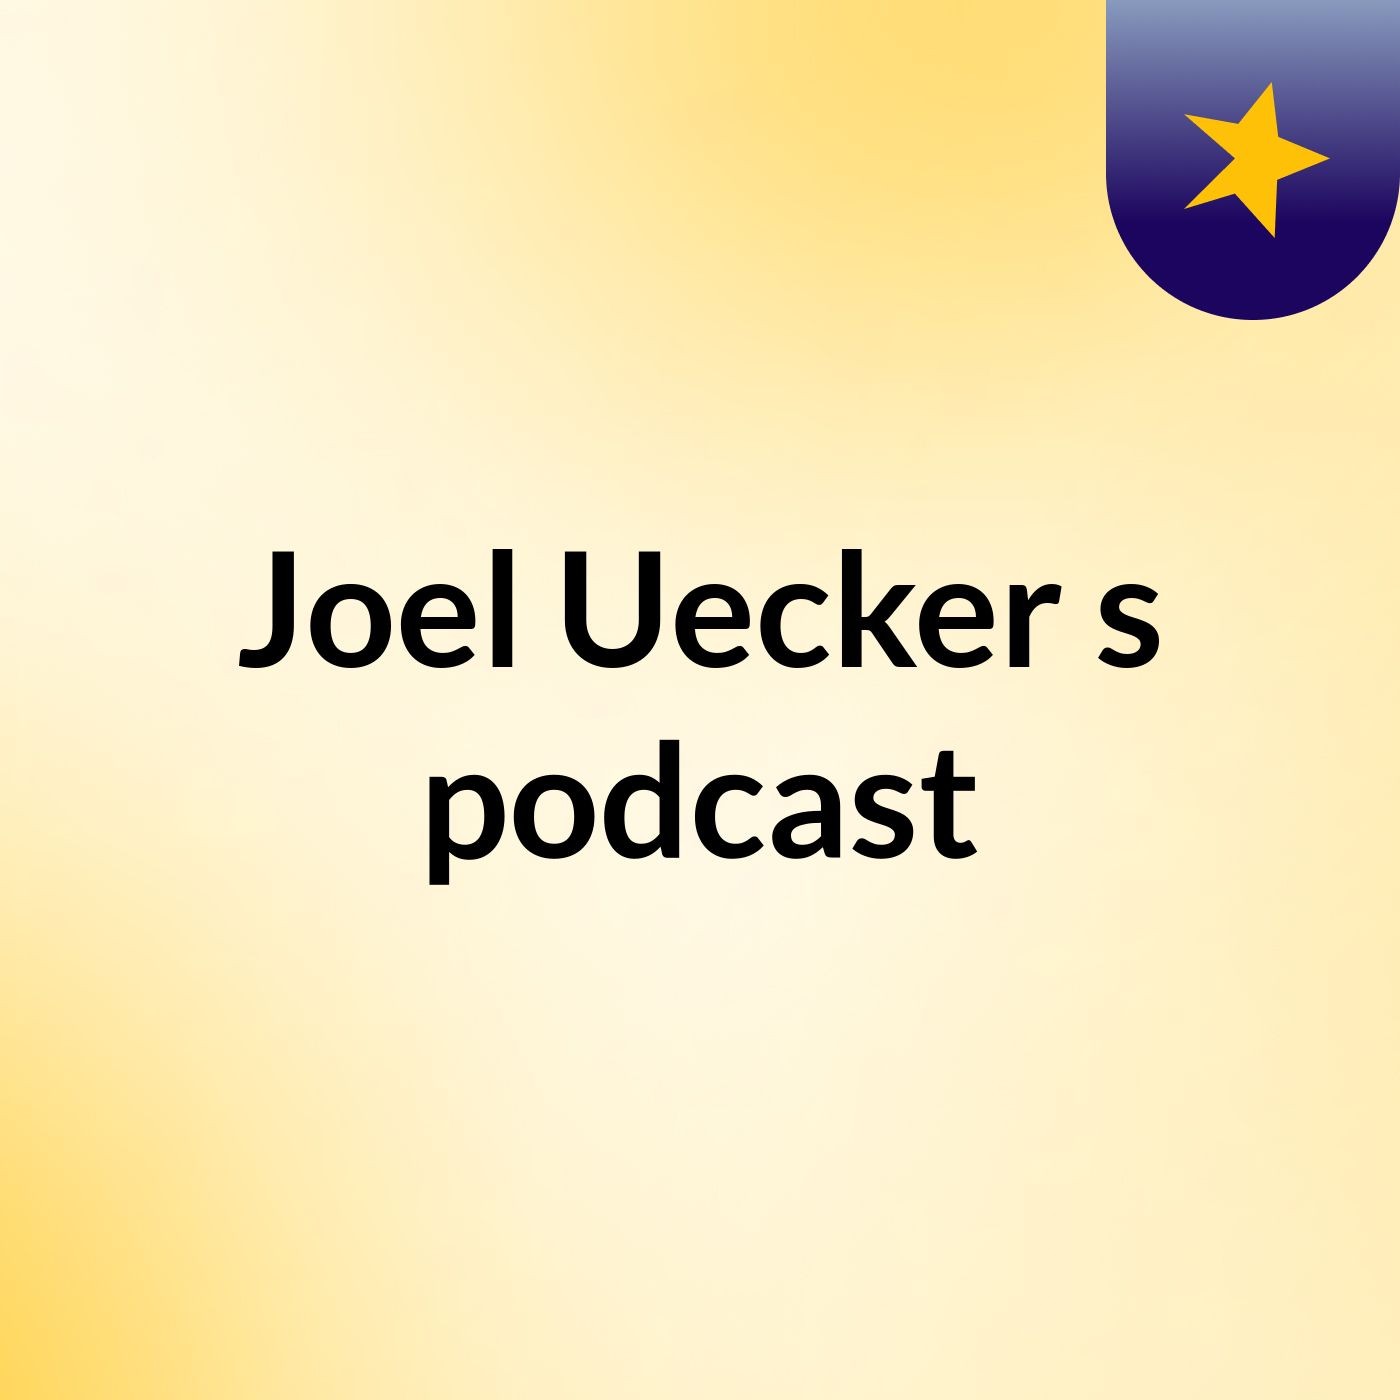 Joel Uecker's podcast